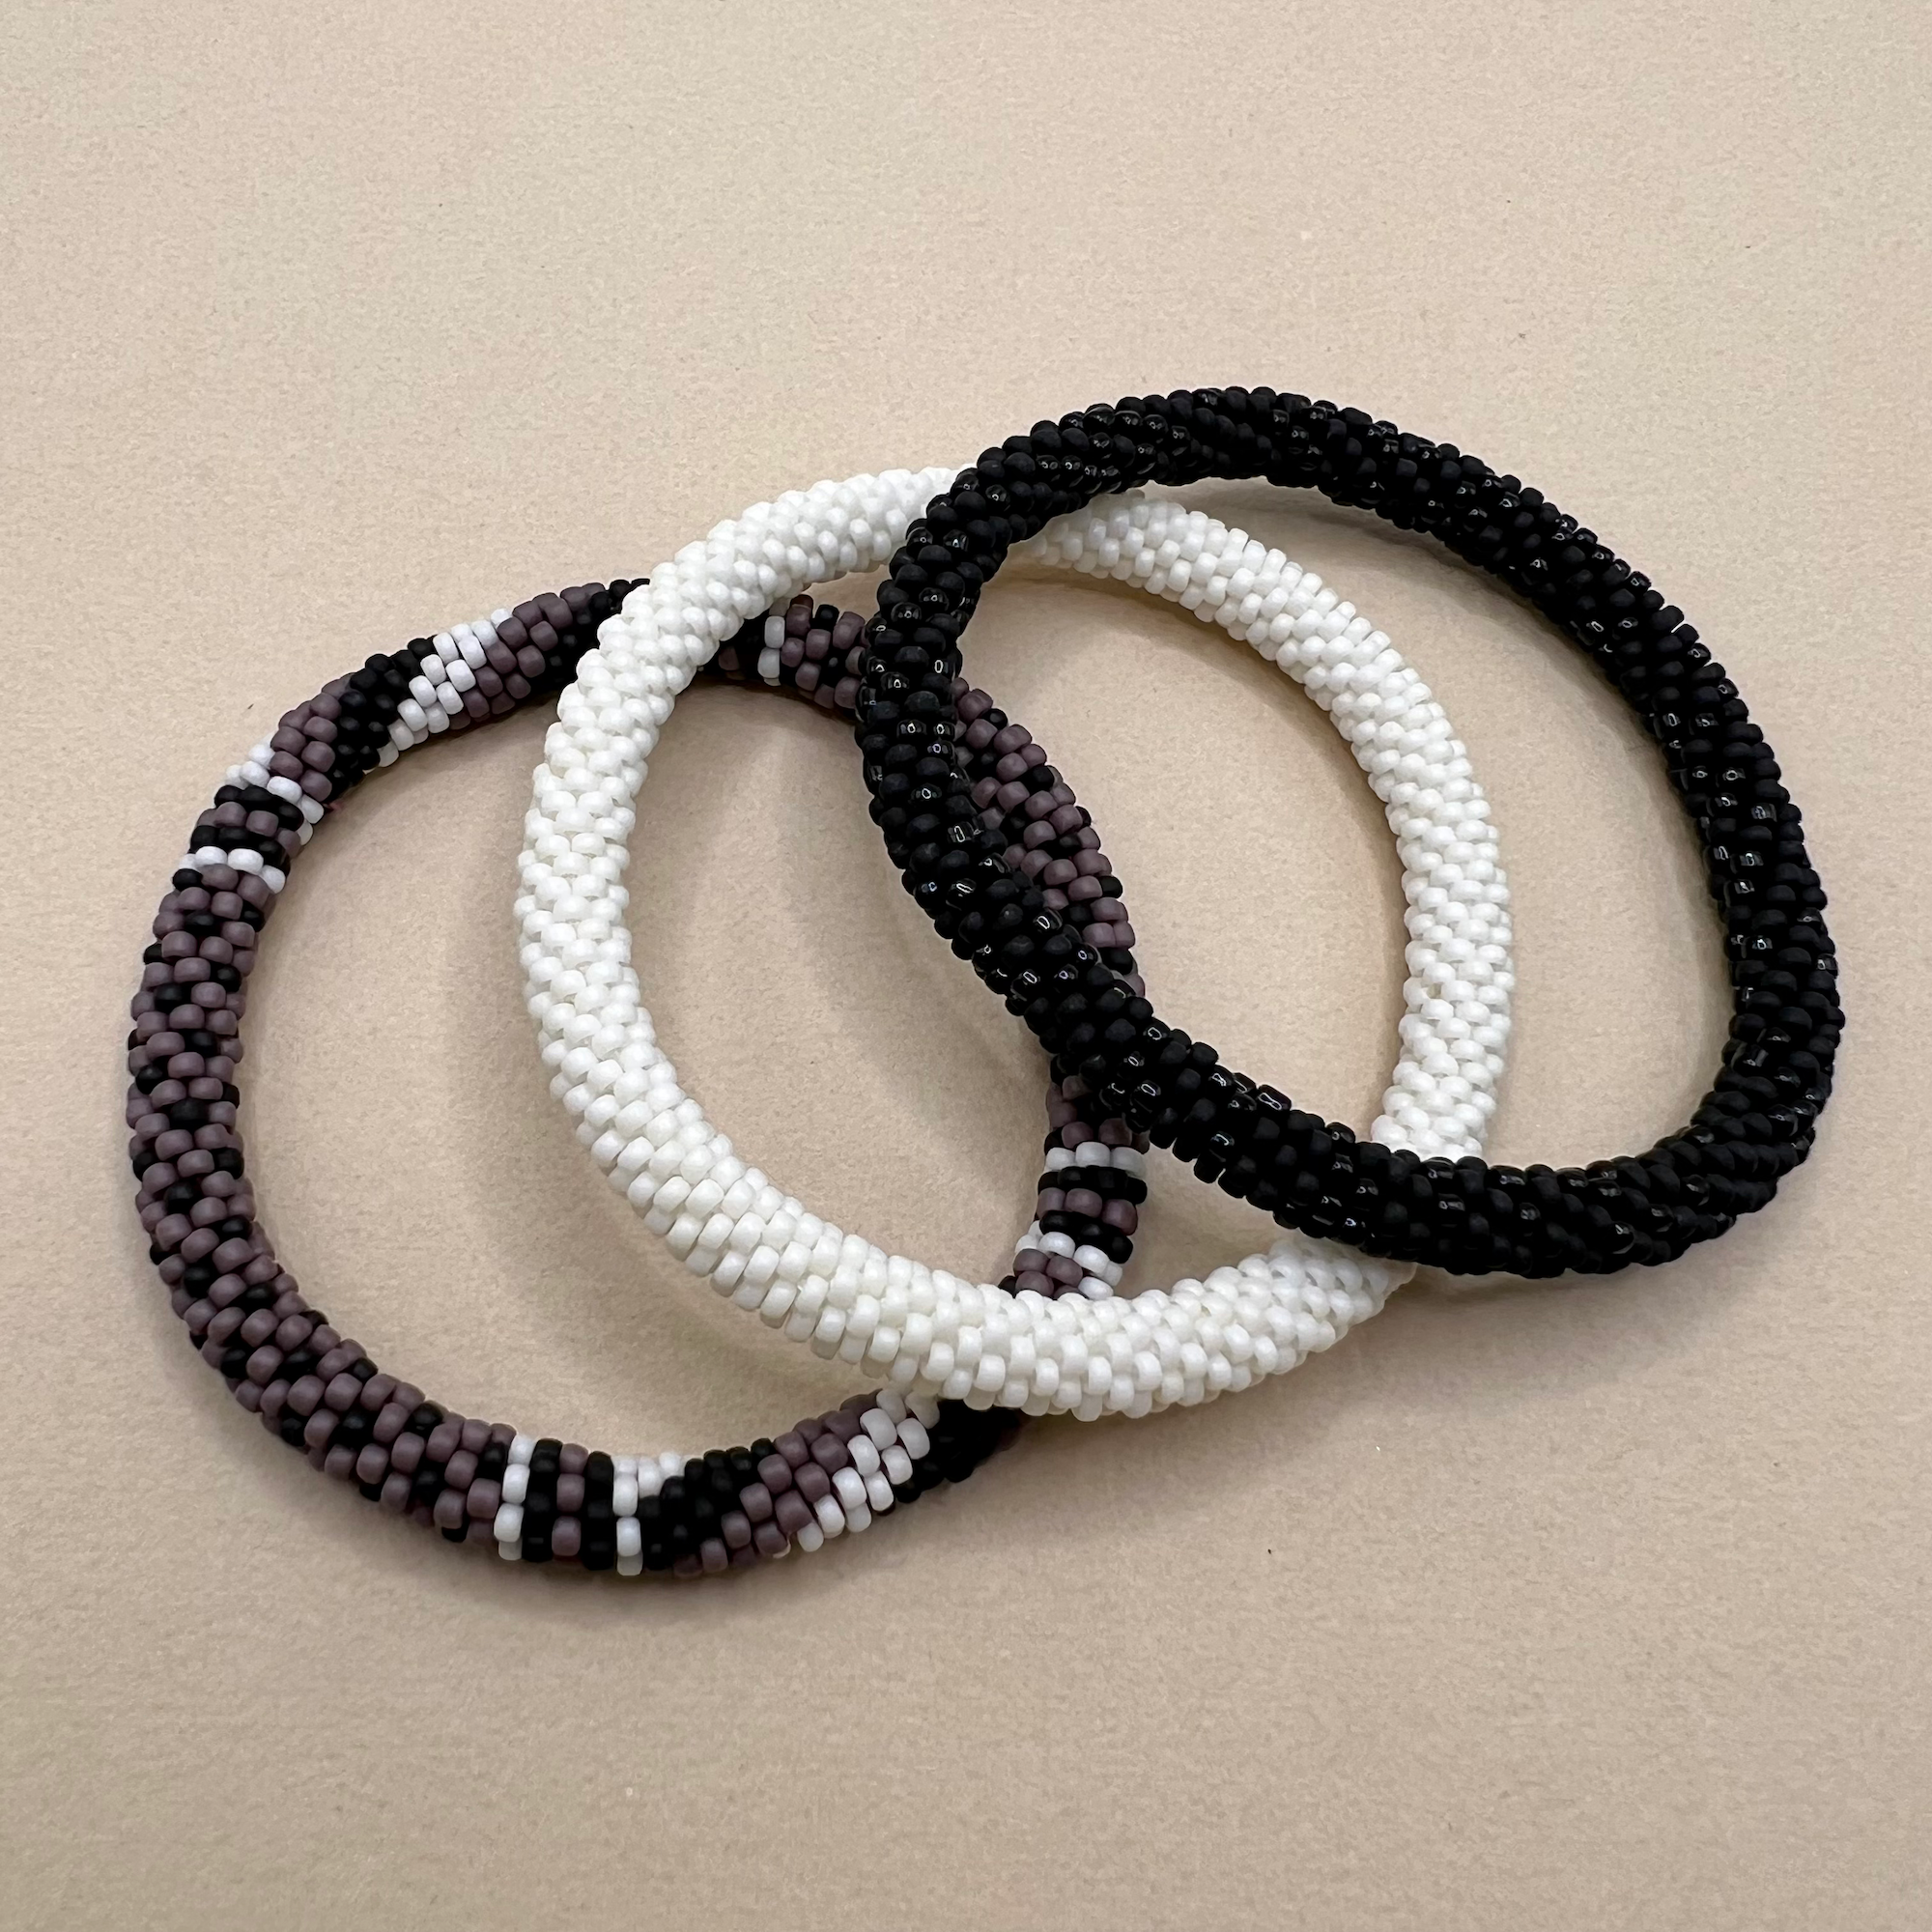 Lavender, Cream, & Black Beaded Bangles - Size 11 Beads